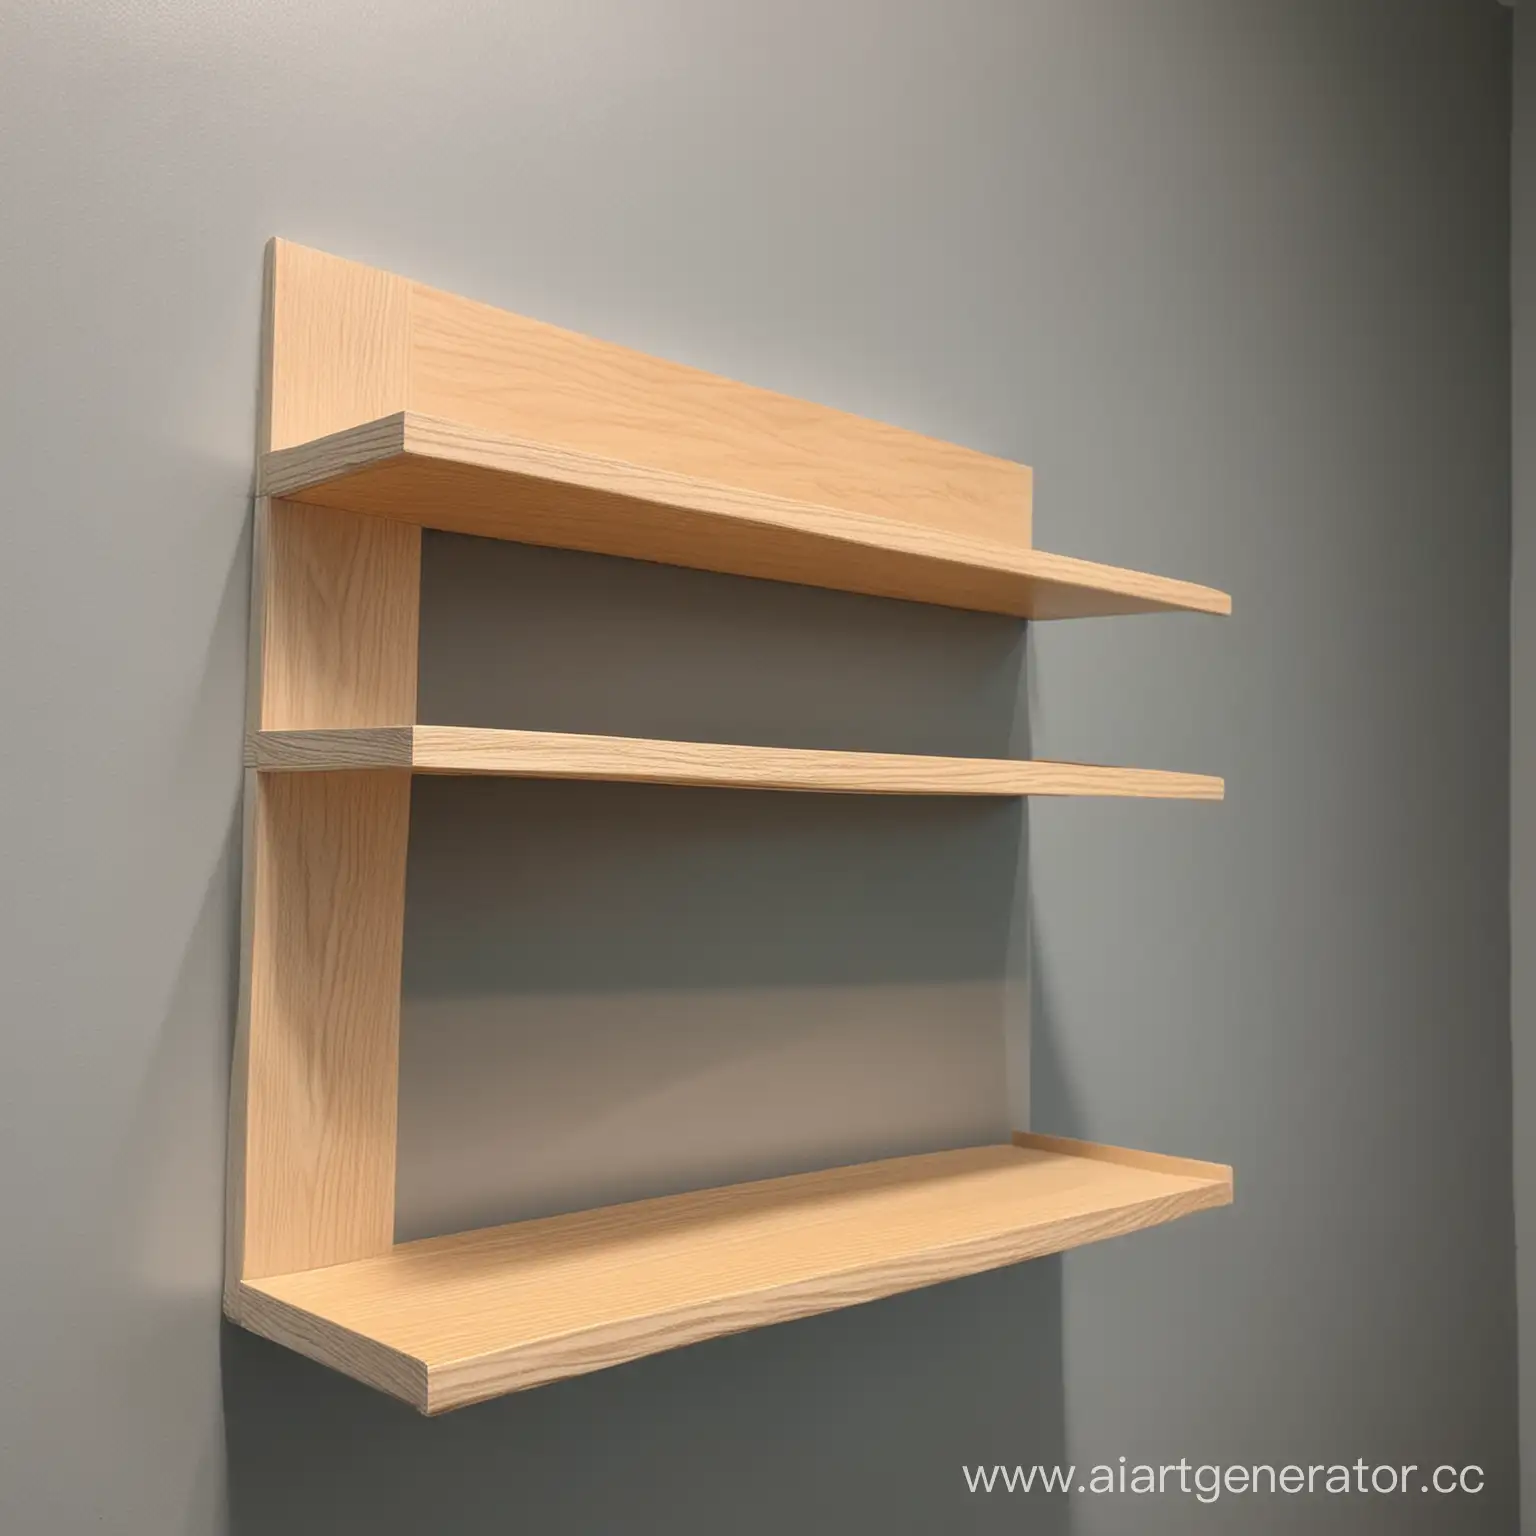 Empty-Shelf-at-an-Angle-Minimalist-Interior-Design-Concept